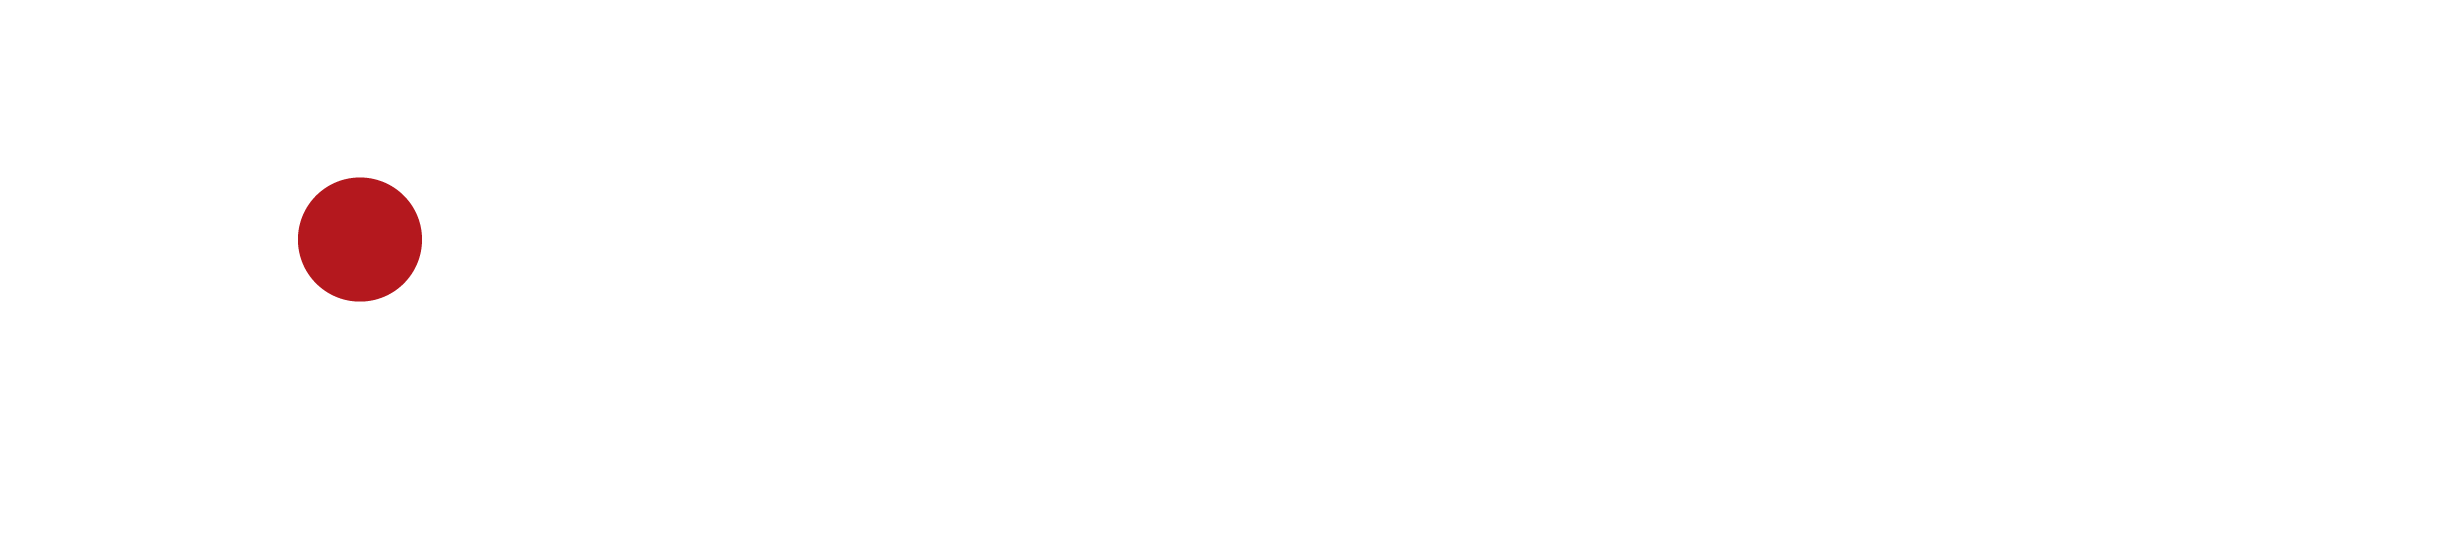 MEscope_VES_logo_white